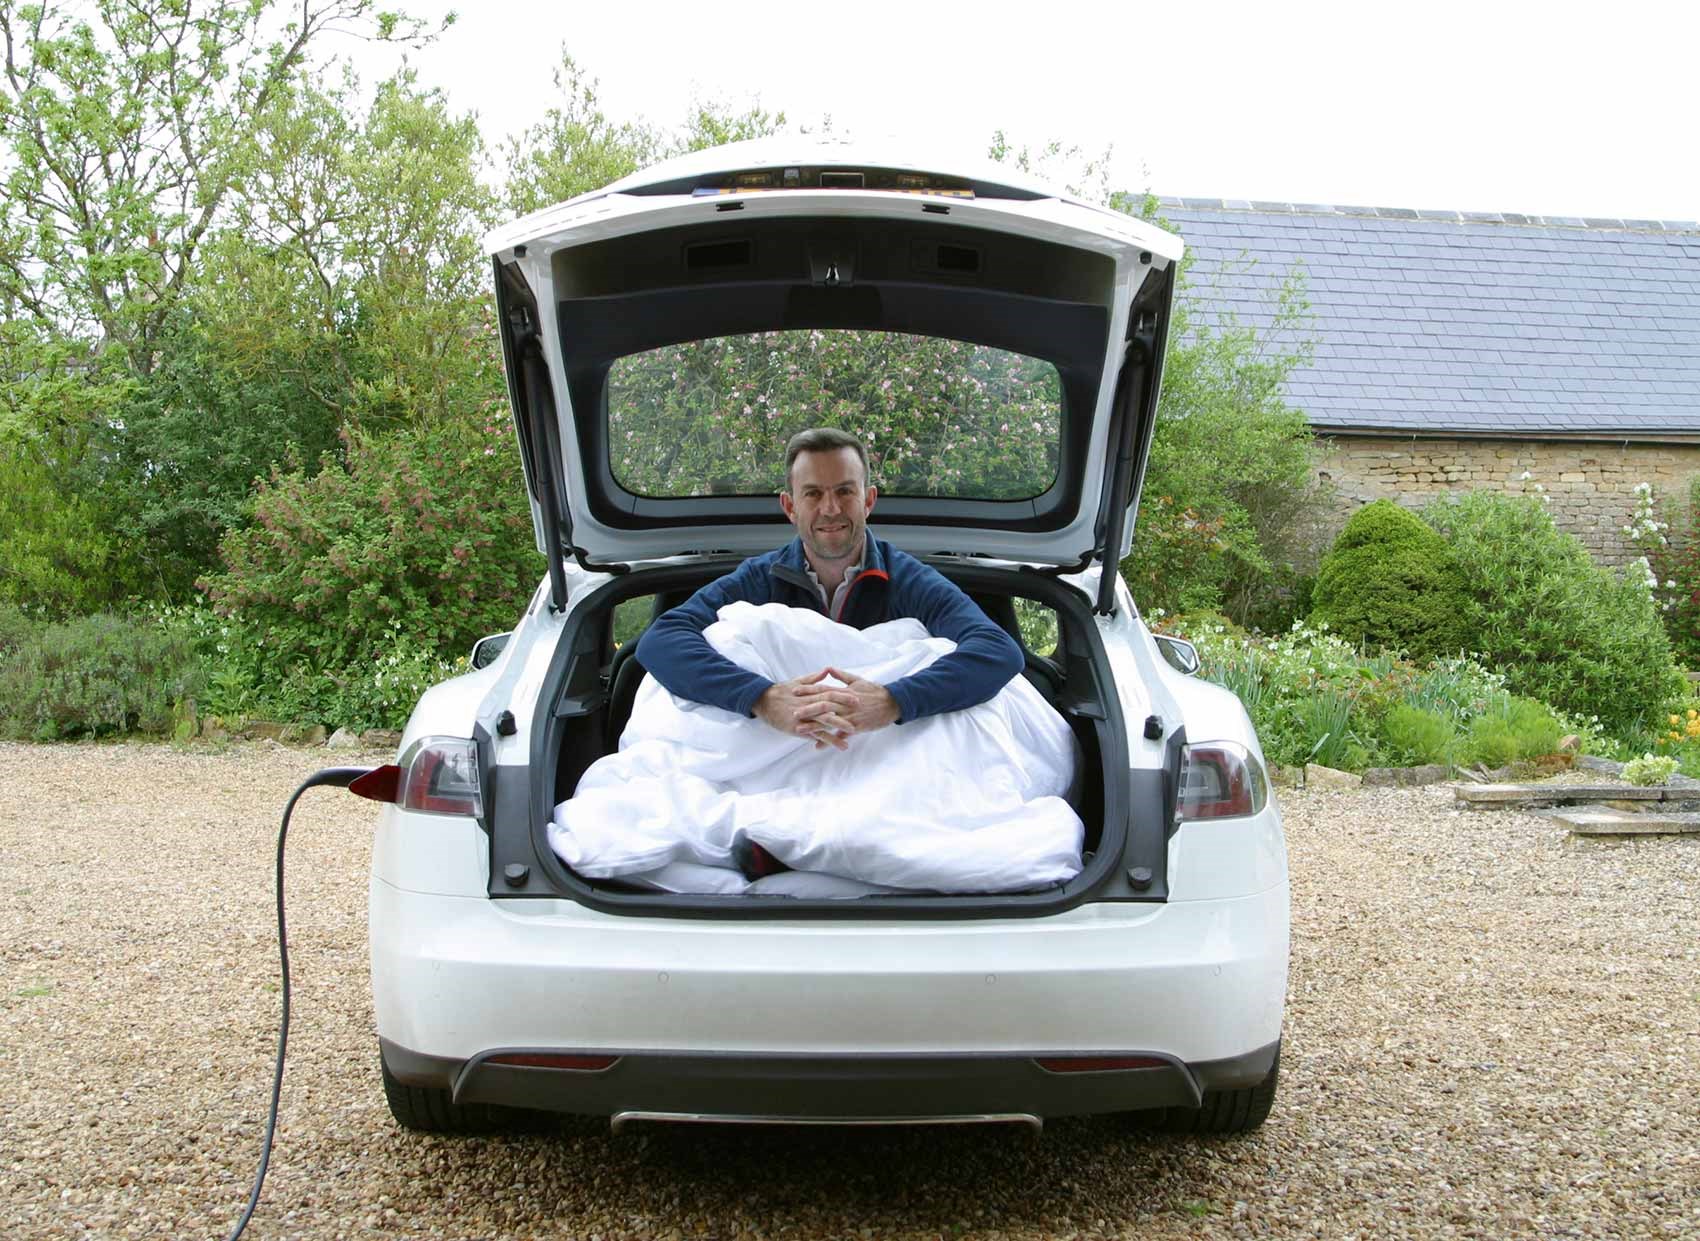 Tesla Parking Only Roadster EV POSTER NEW Electric Vehicle Model S Model X